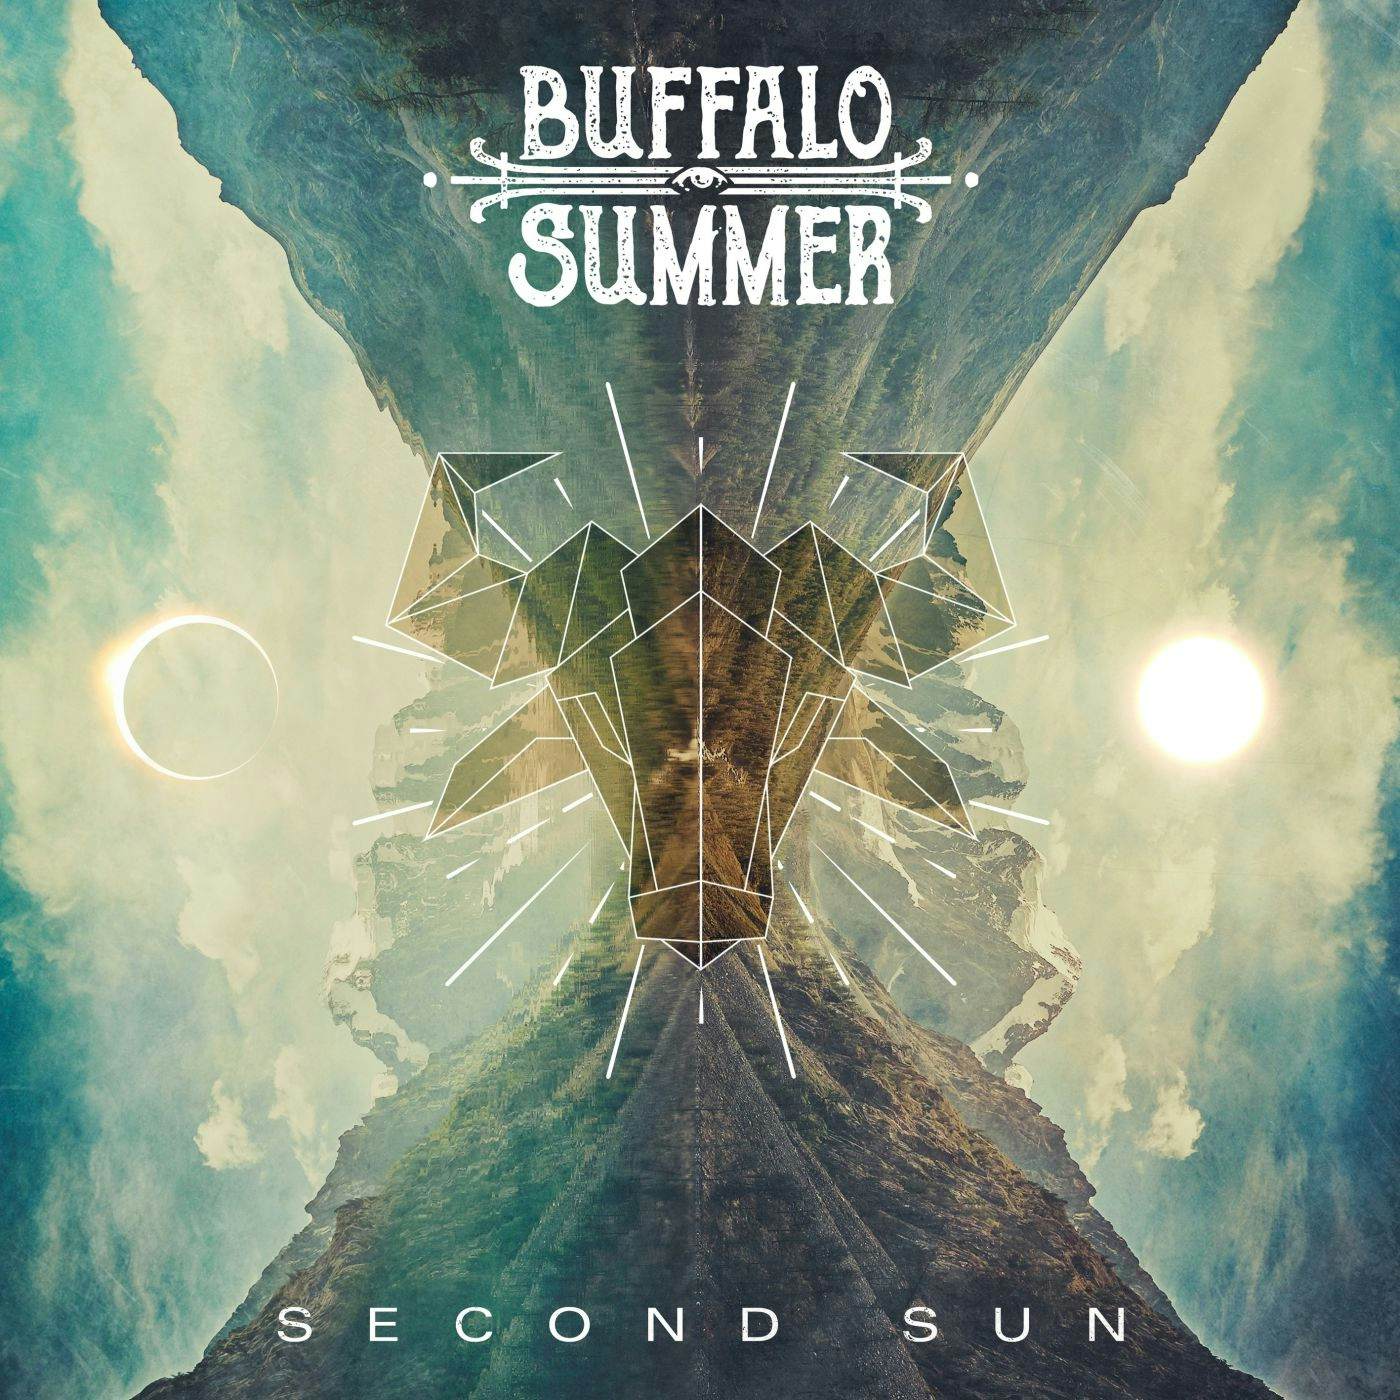 Buffalo Summer Second Sun Vinyl Record